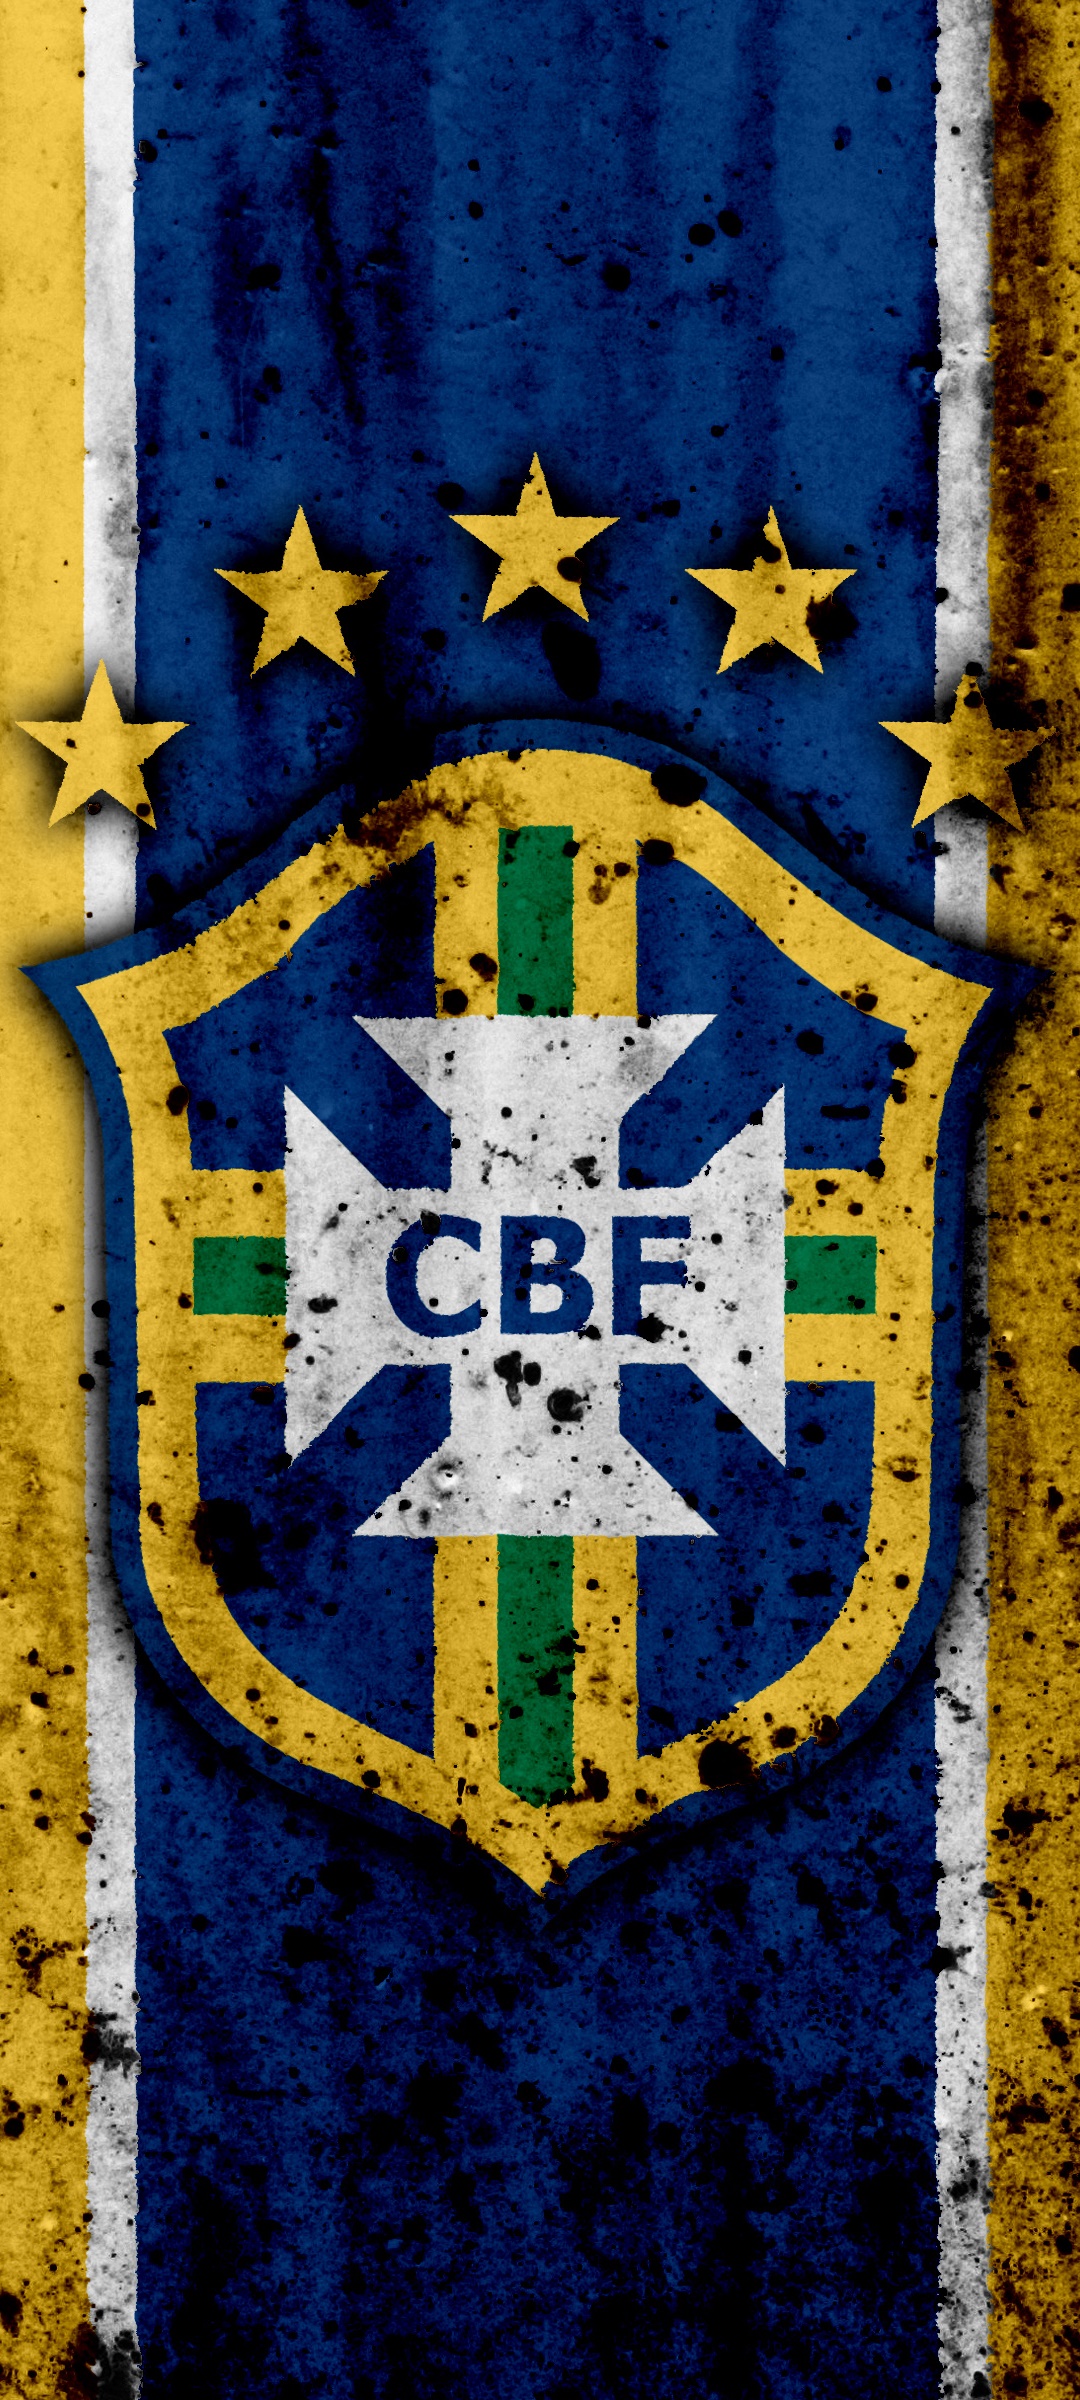 Brazil National Football Team phone wallpaper 1080P, 2k, 4k Full HD Wallpaper, Background Free Download